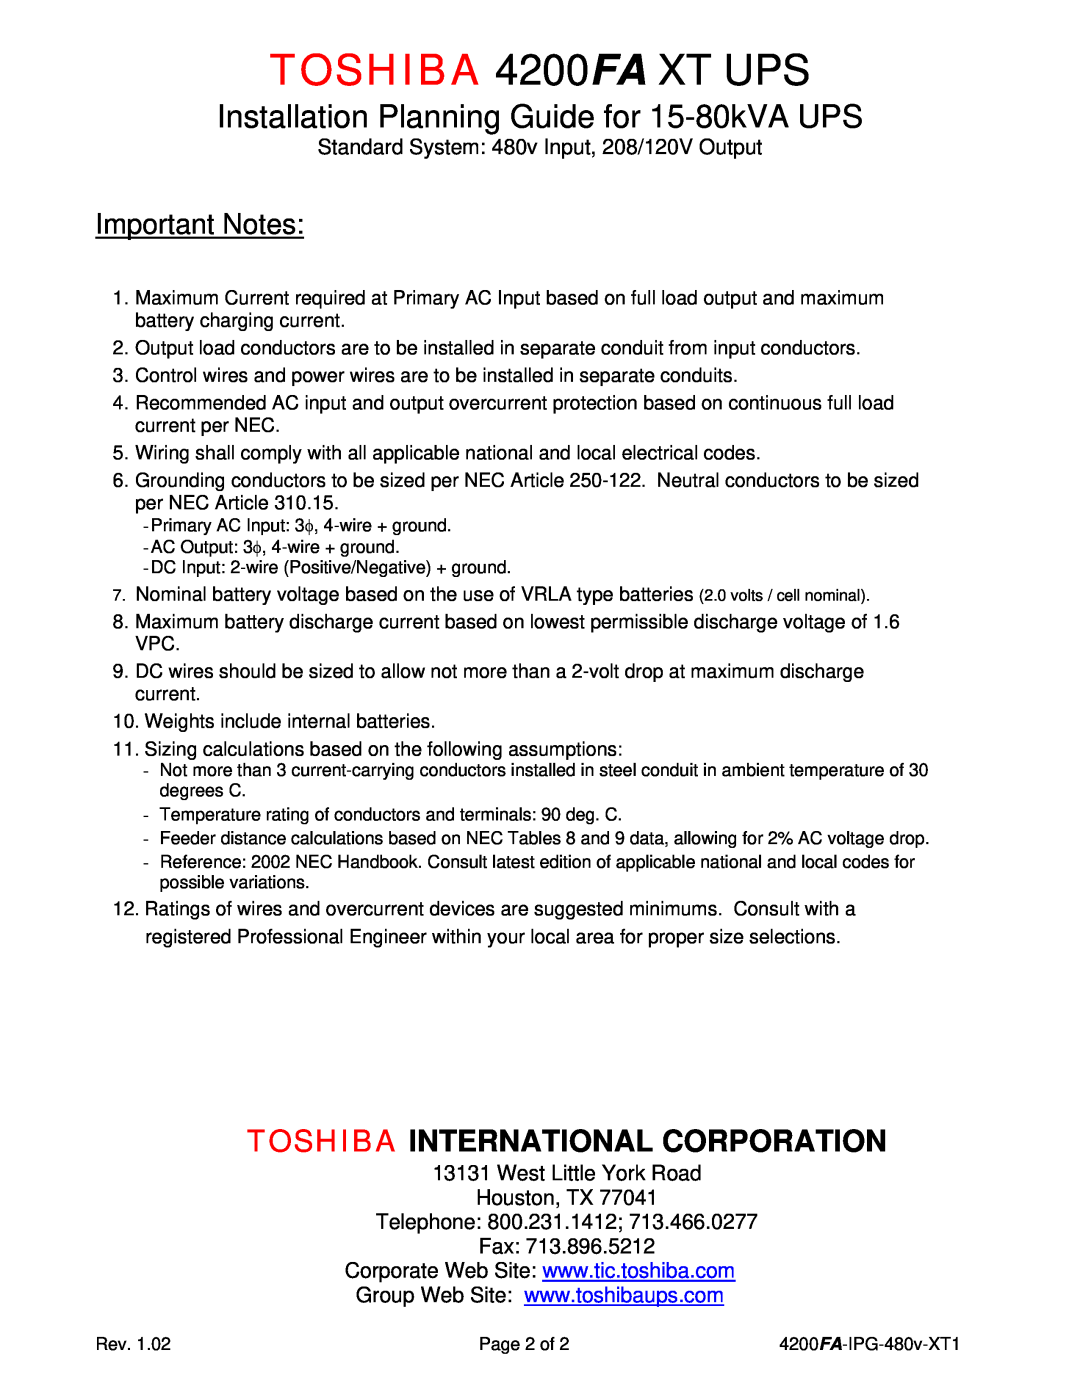 Toshiba dimensions West Little York Road Houston, TX Telephone 800.231.1412 Fax, TOSHIBA 4200FA XT UPS, Important Notes 